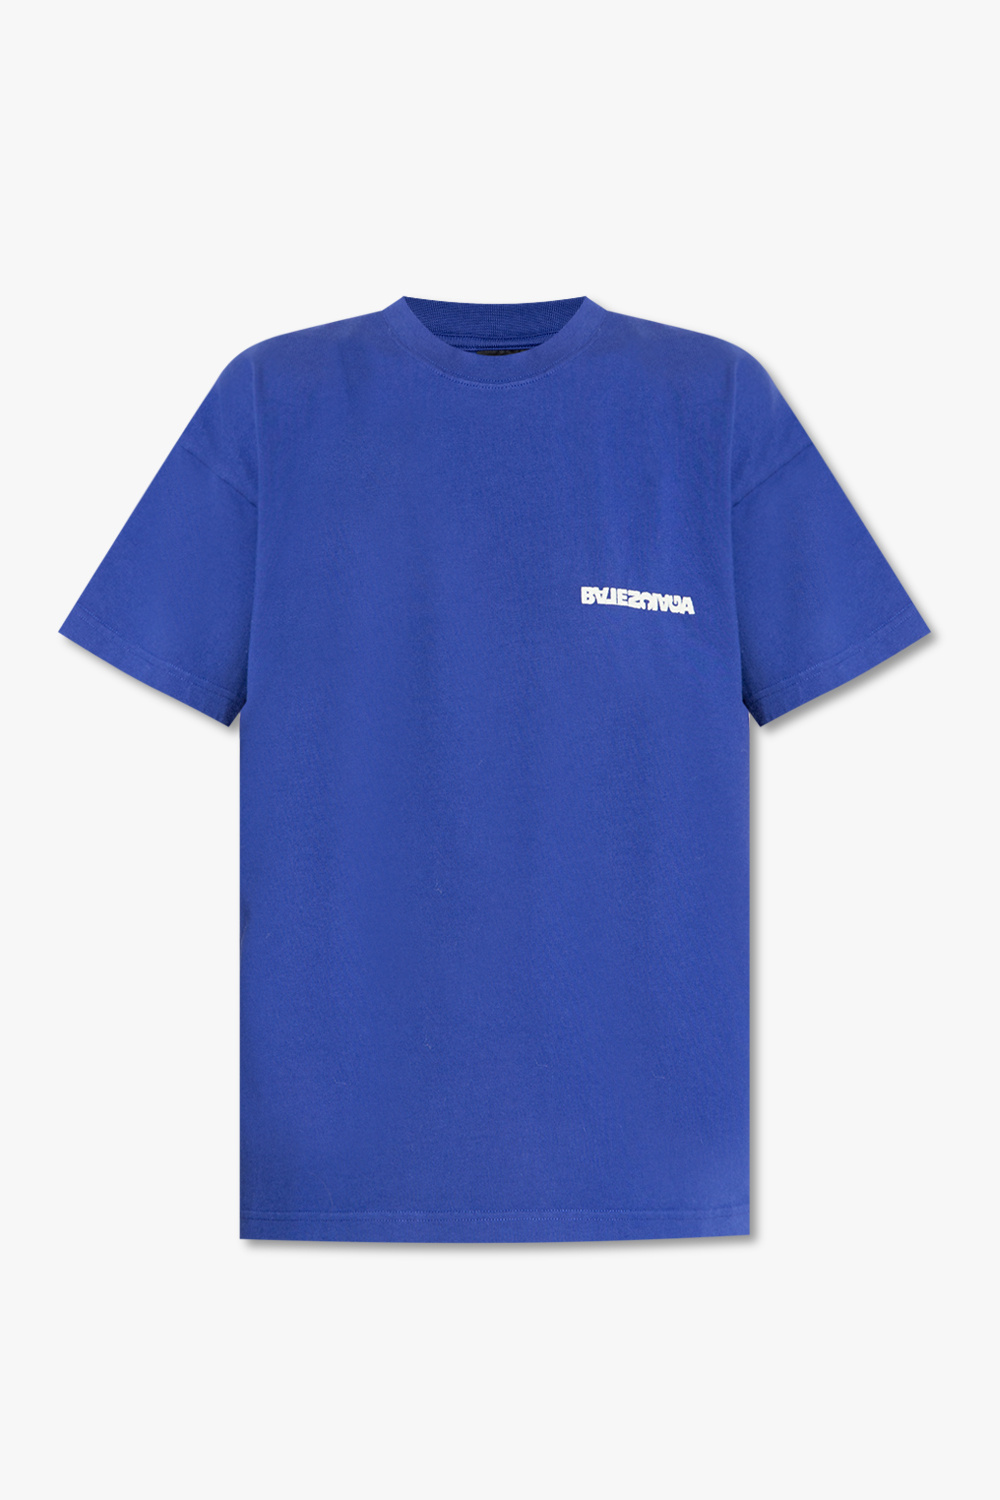 Blue T-shirt with logo Balenciaga - Vitkac TW